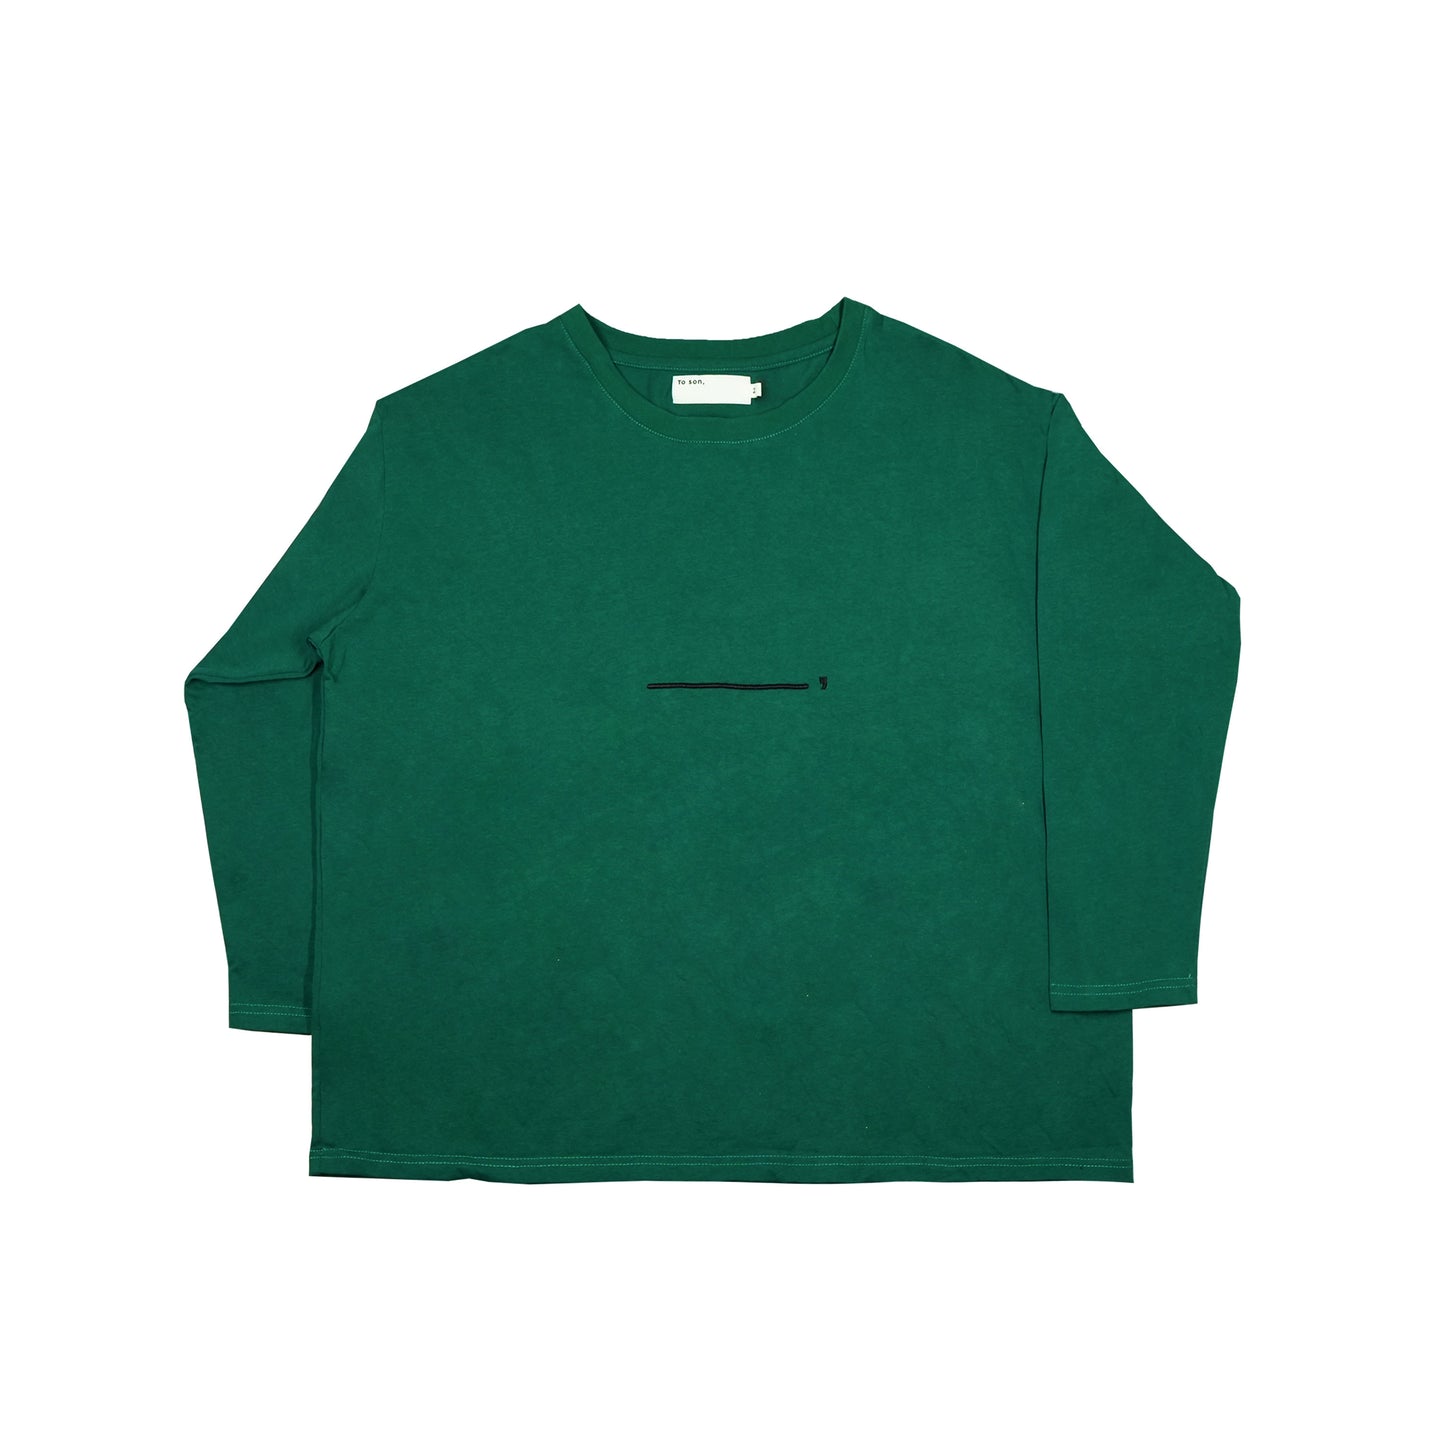 Toson, "Dinosaur" Patchwork Long Sleeve T-shirt - Green